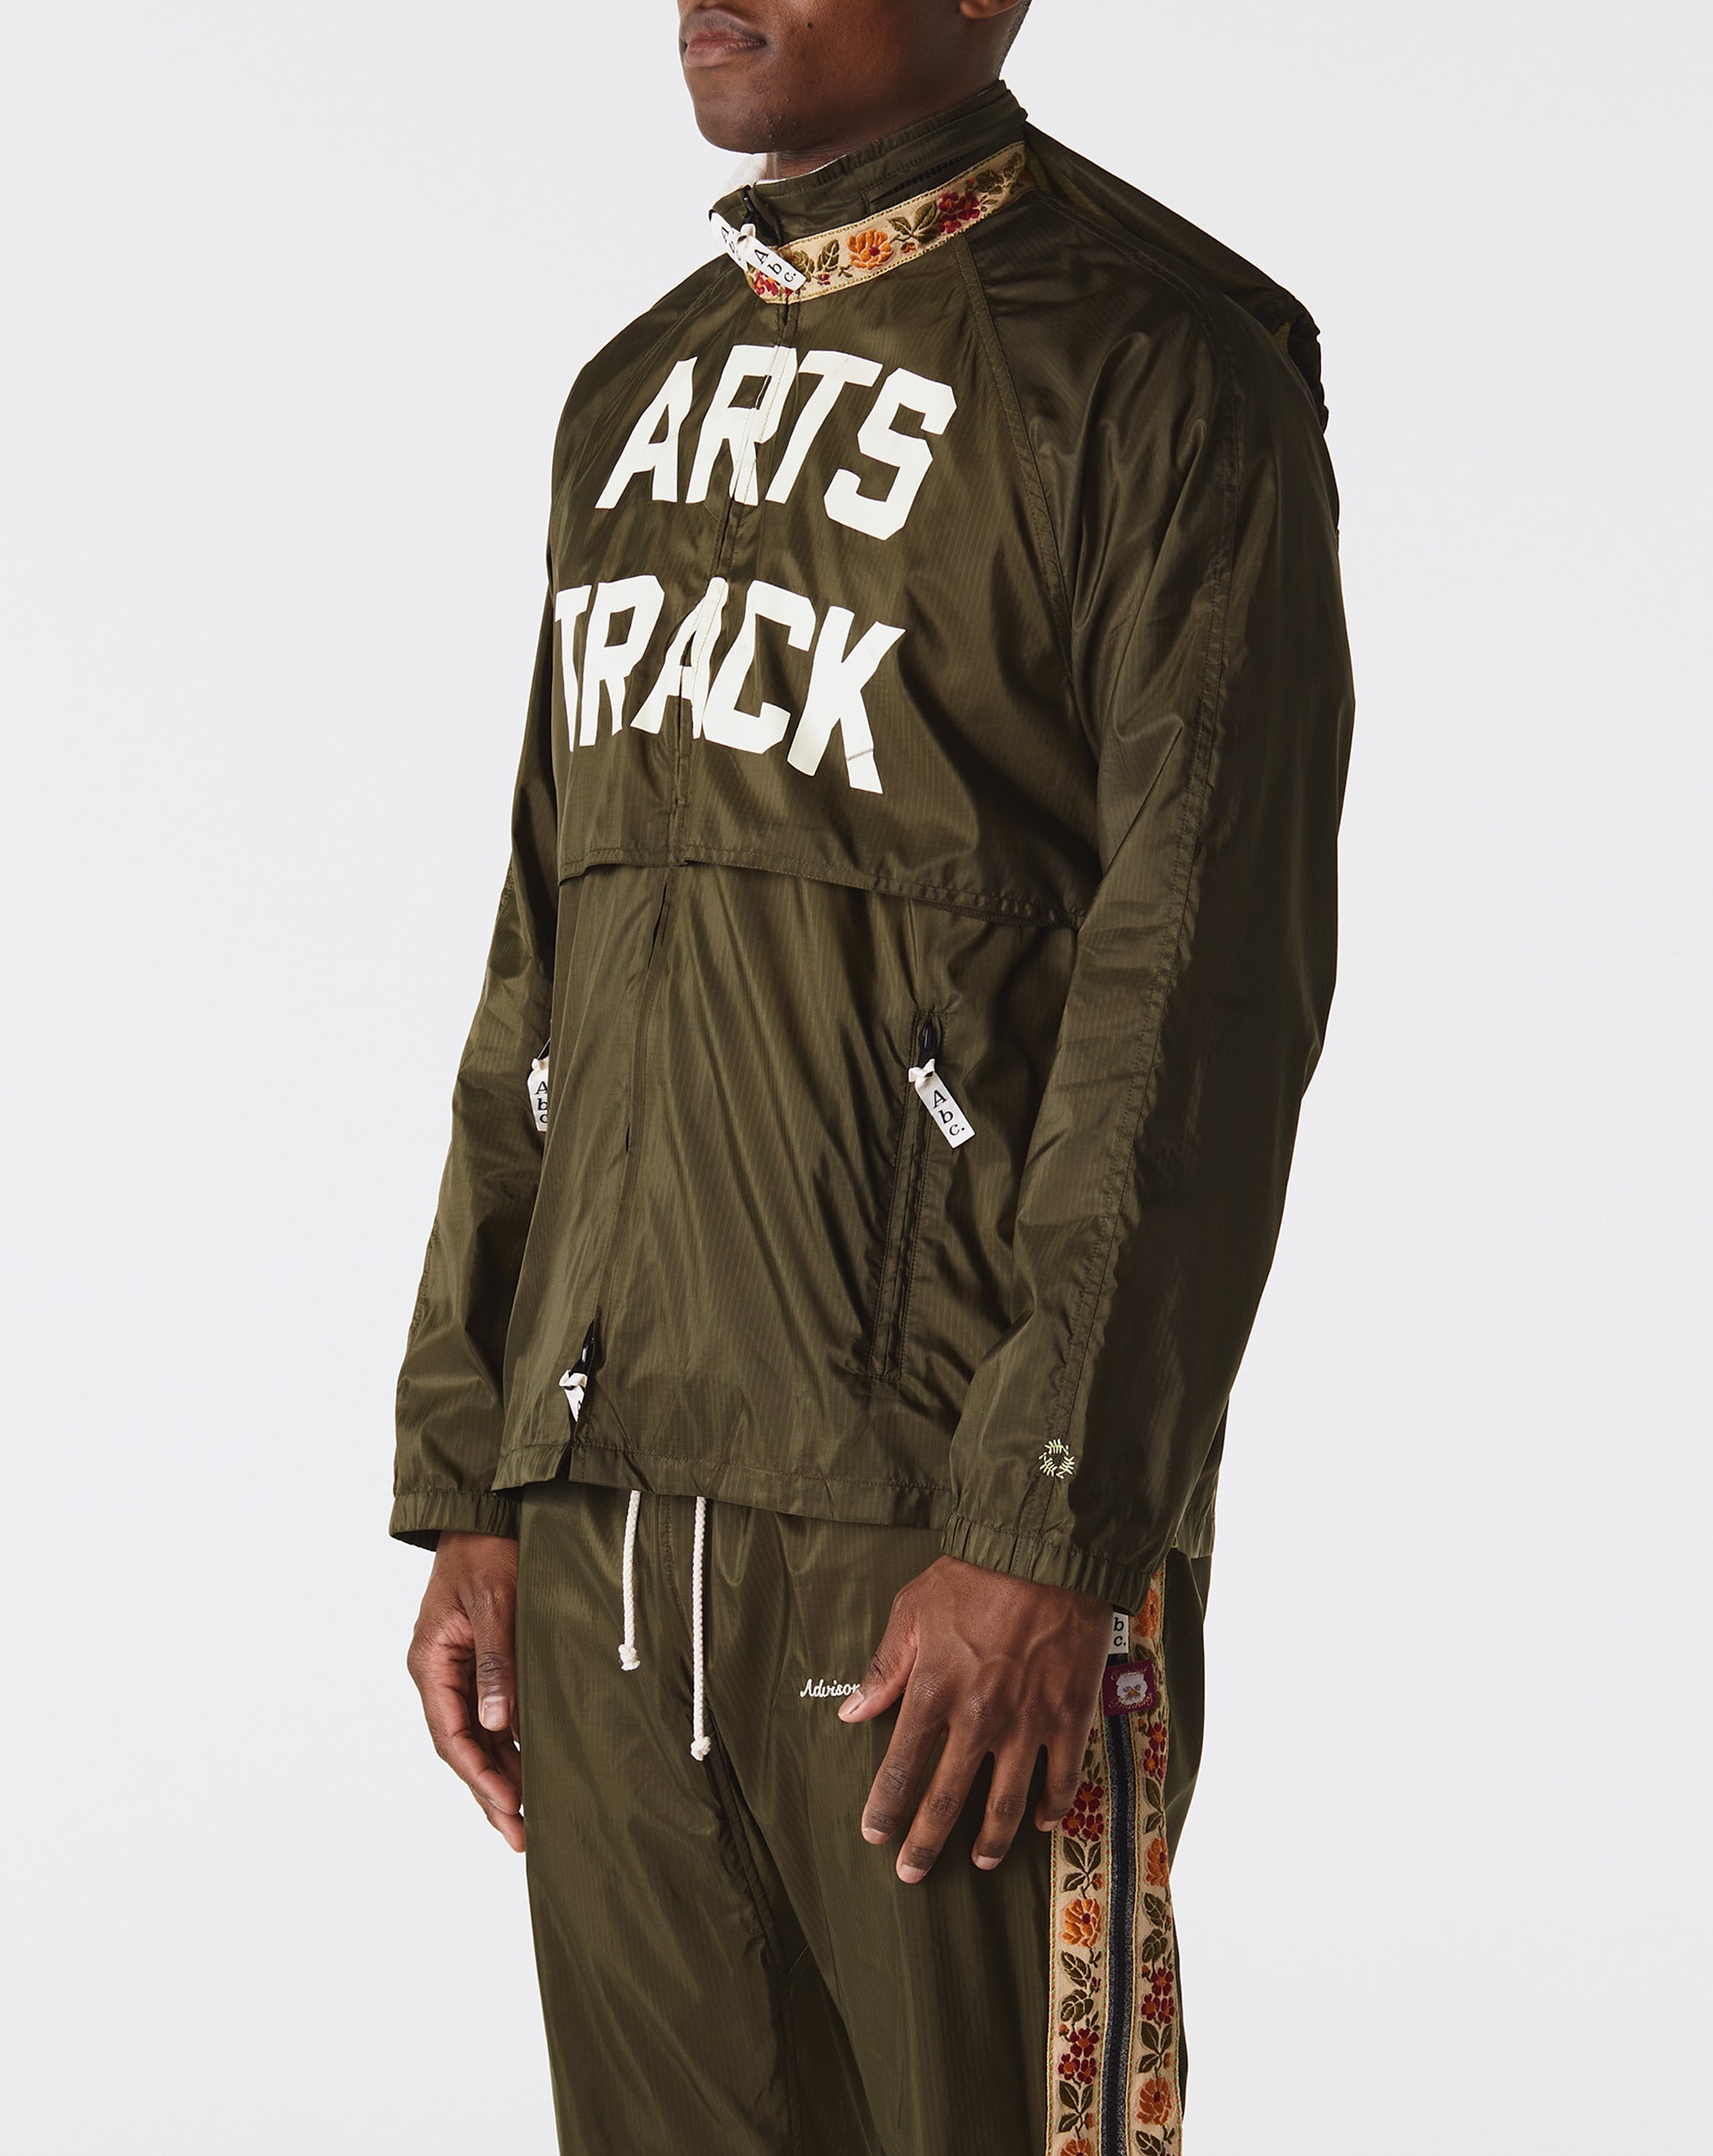 Herd Mentality T-Shirt Arts Track Ripstop Jacket  - Cheap Urlfreeze Jordan outlet